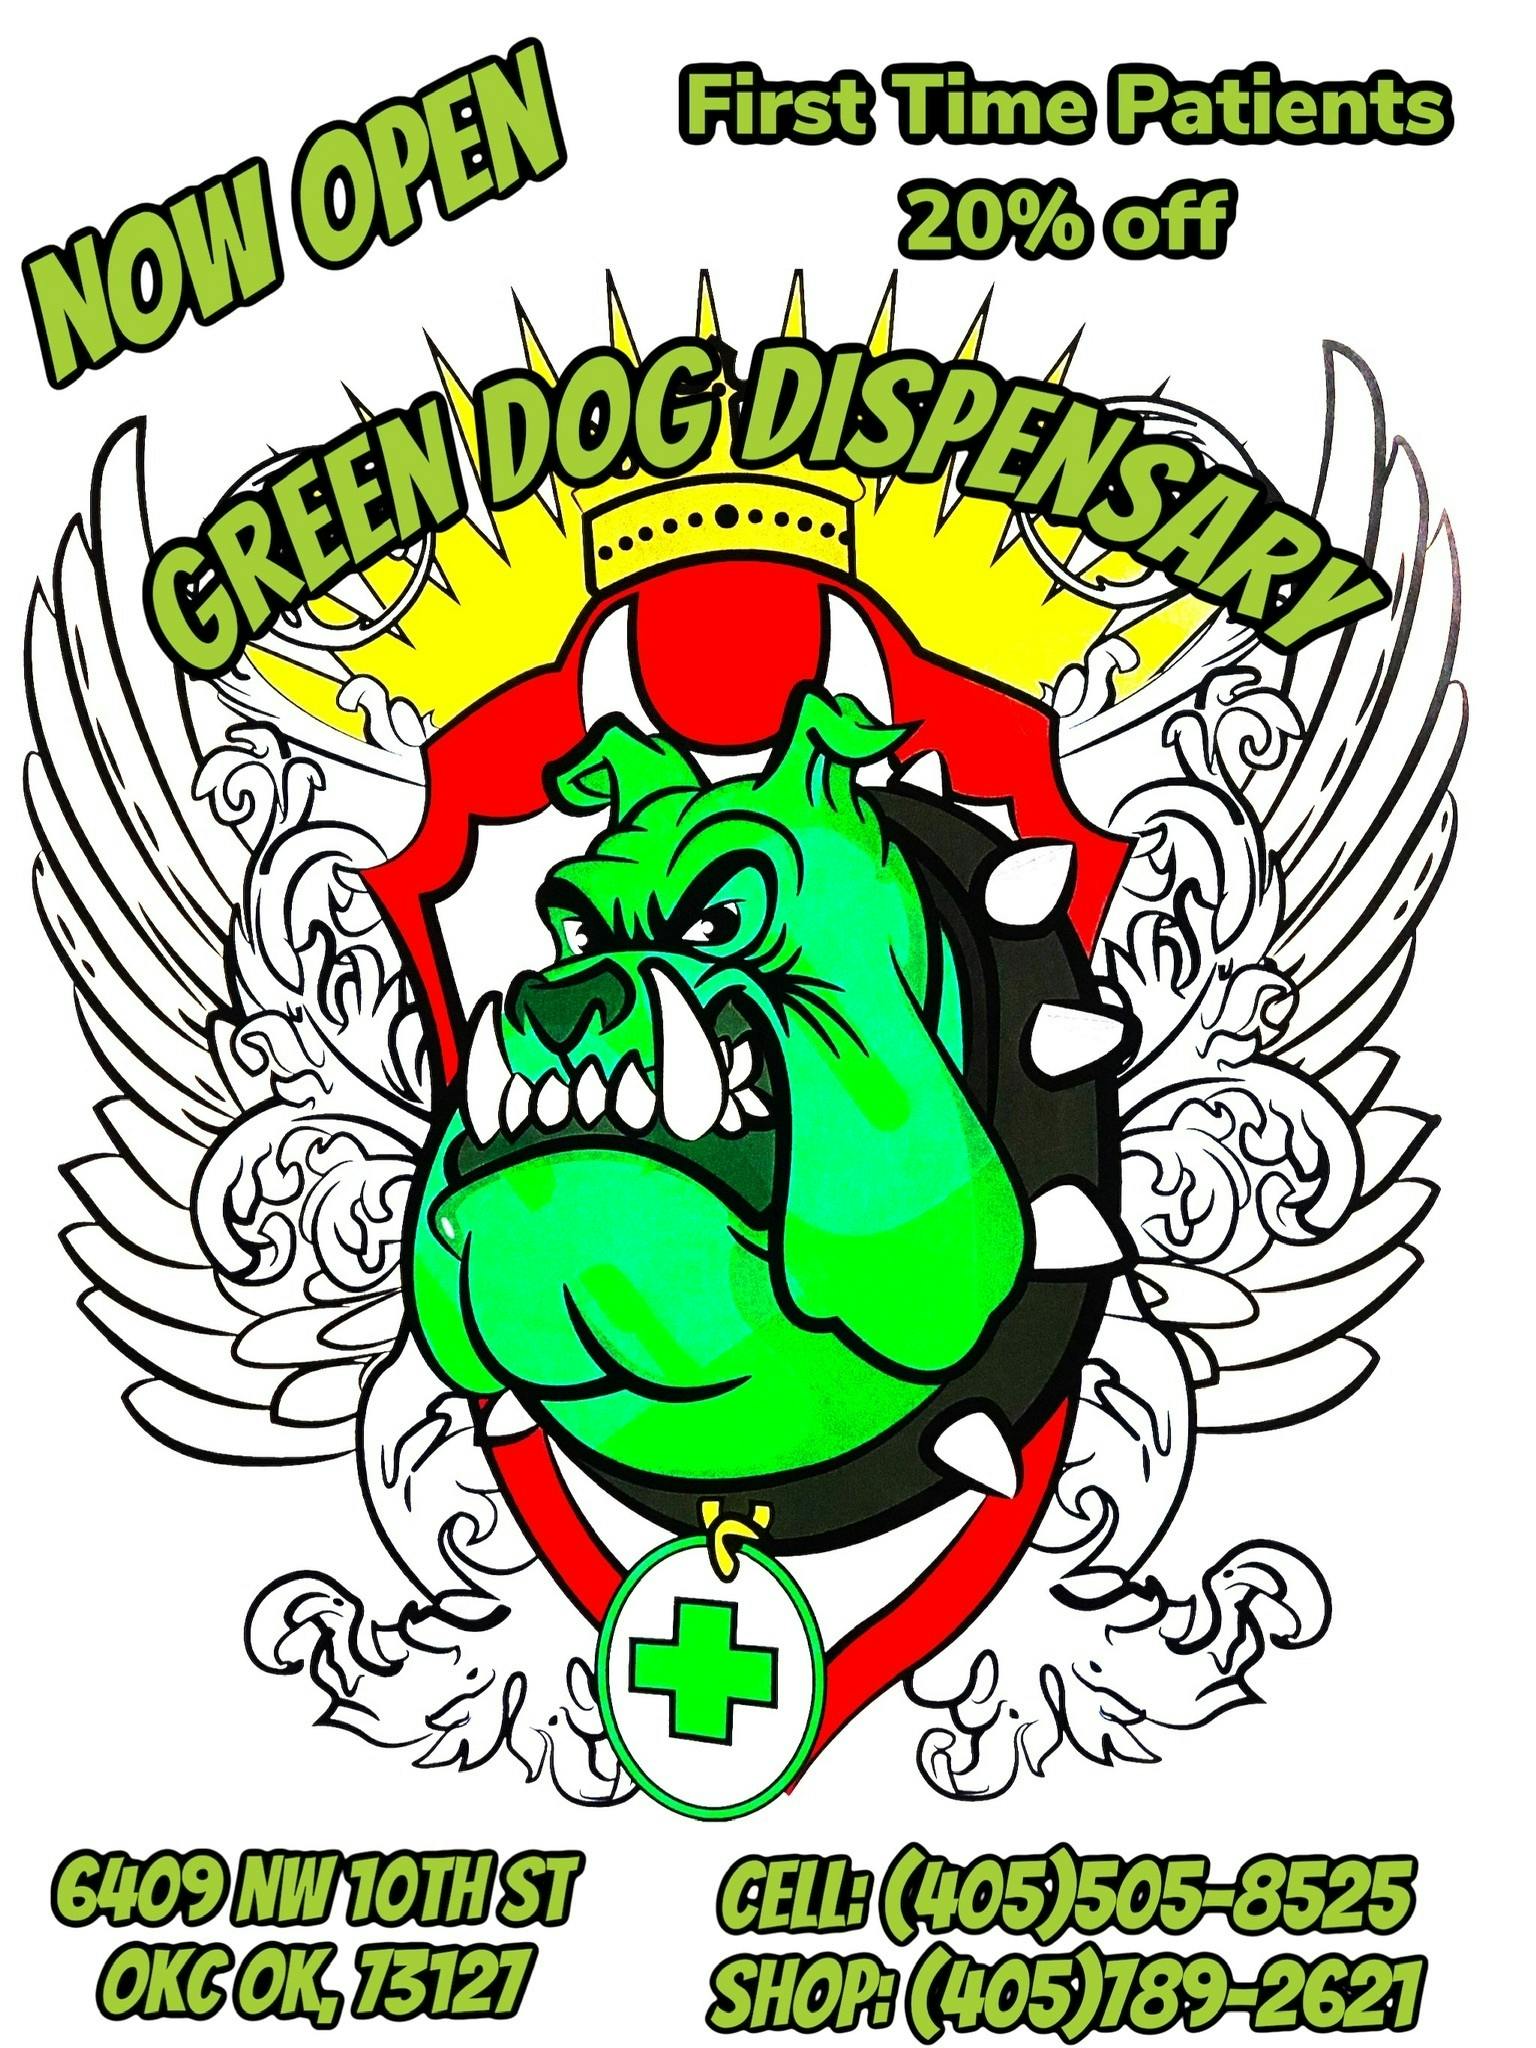 Green Dog Dispensary logo